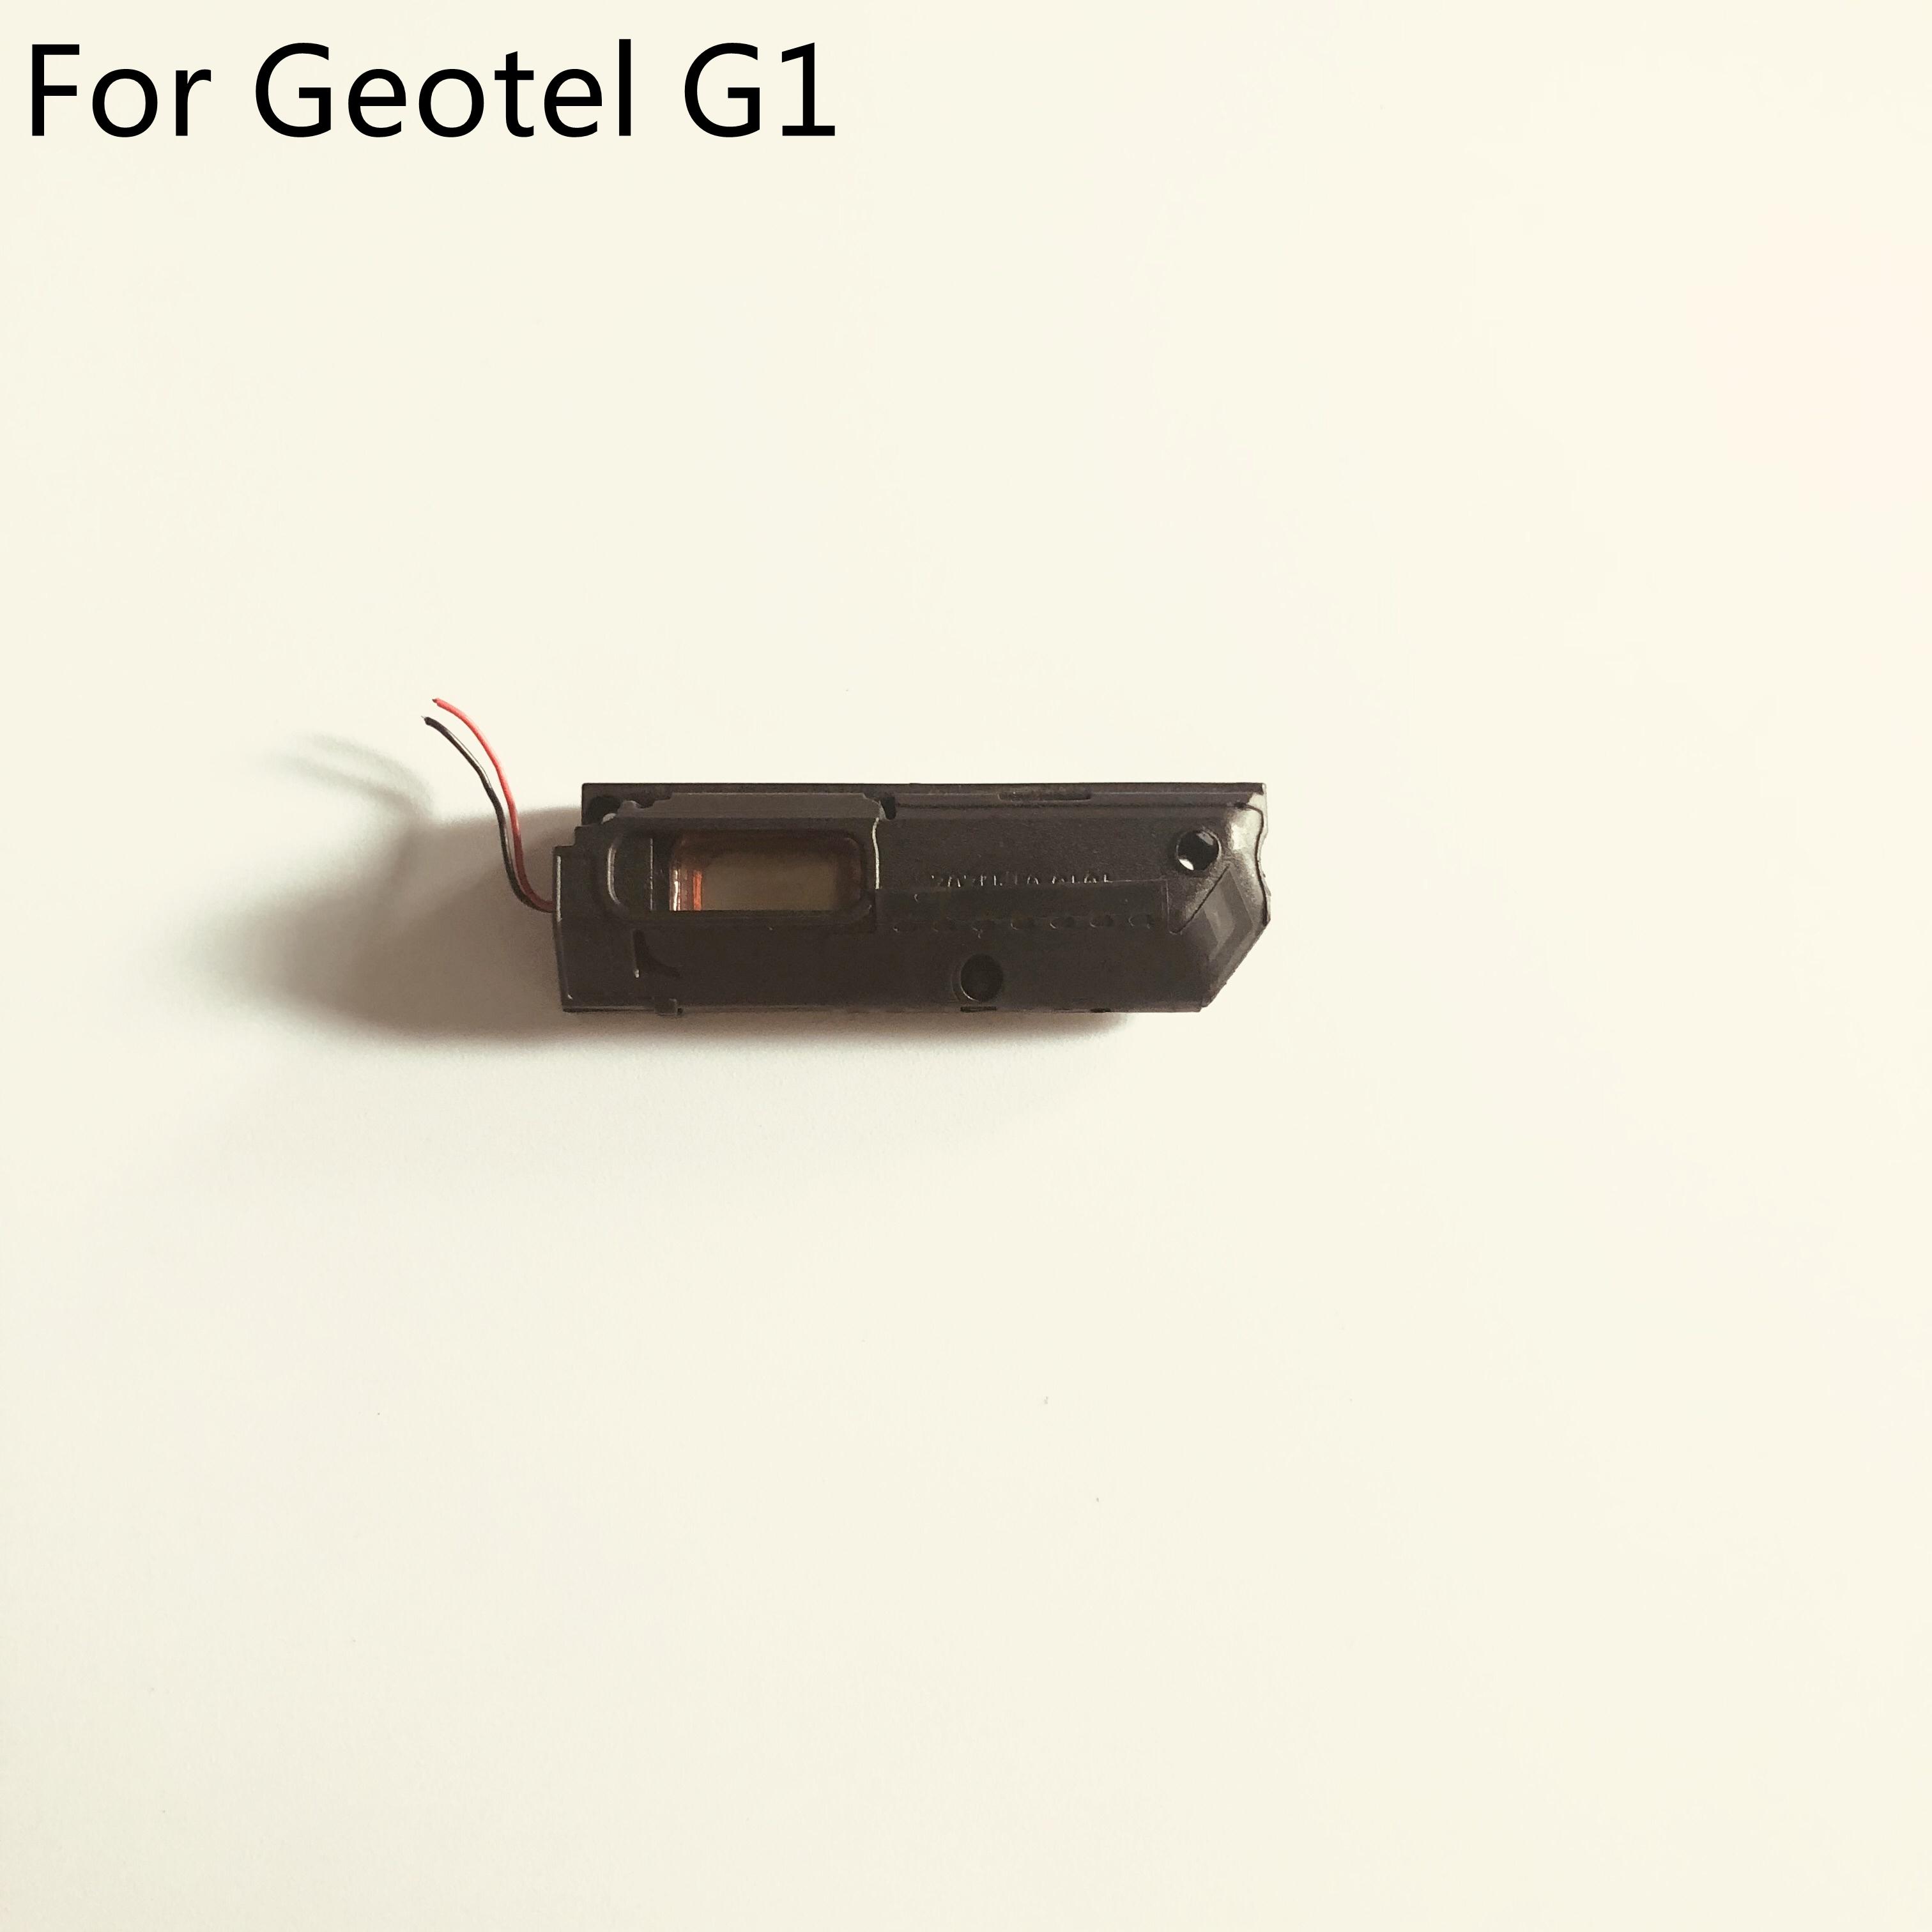 Изображение товара: Громкий динамик Geotel G1, для Geotel G1 MTK6580A, 4 ядра, 5,0 дюйма, 1280x720